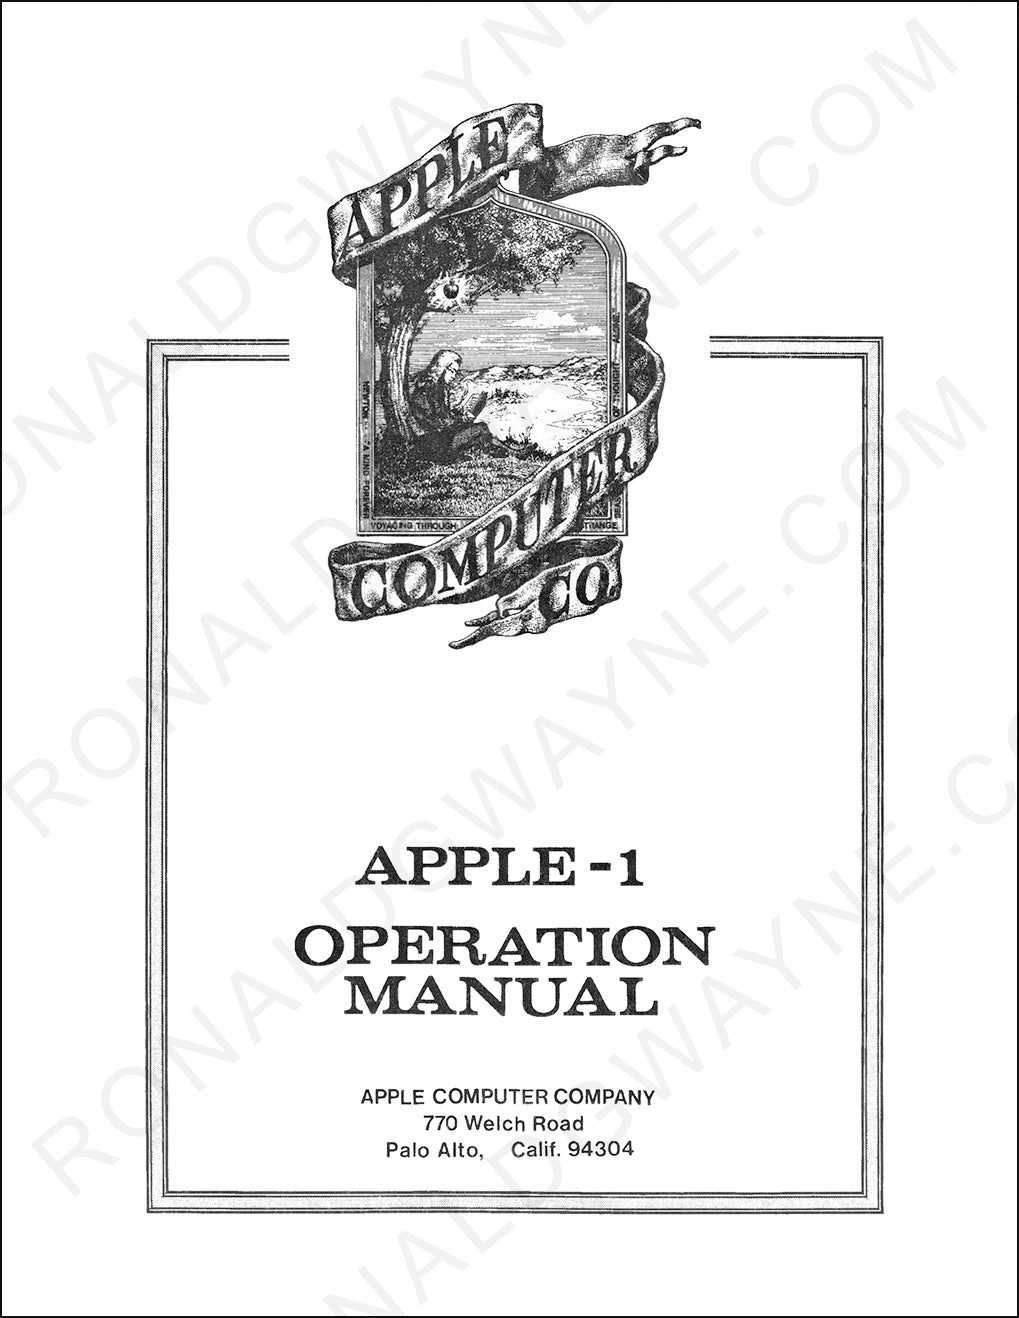 Apple-1 Operation Manual